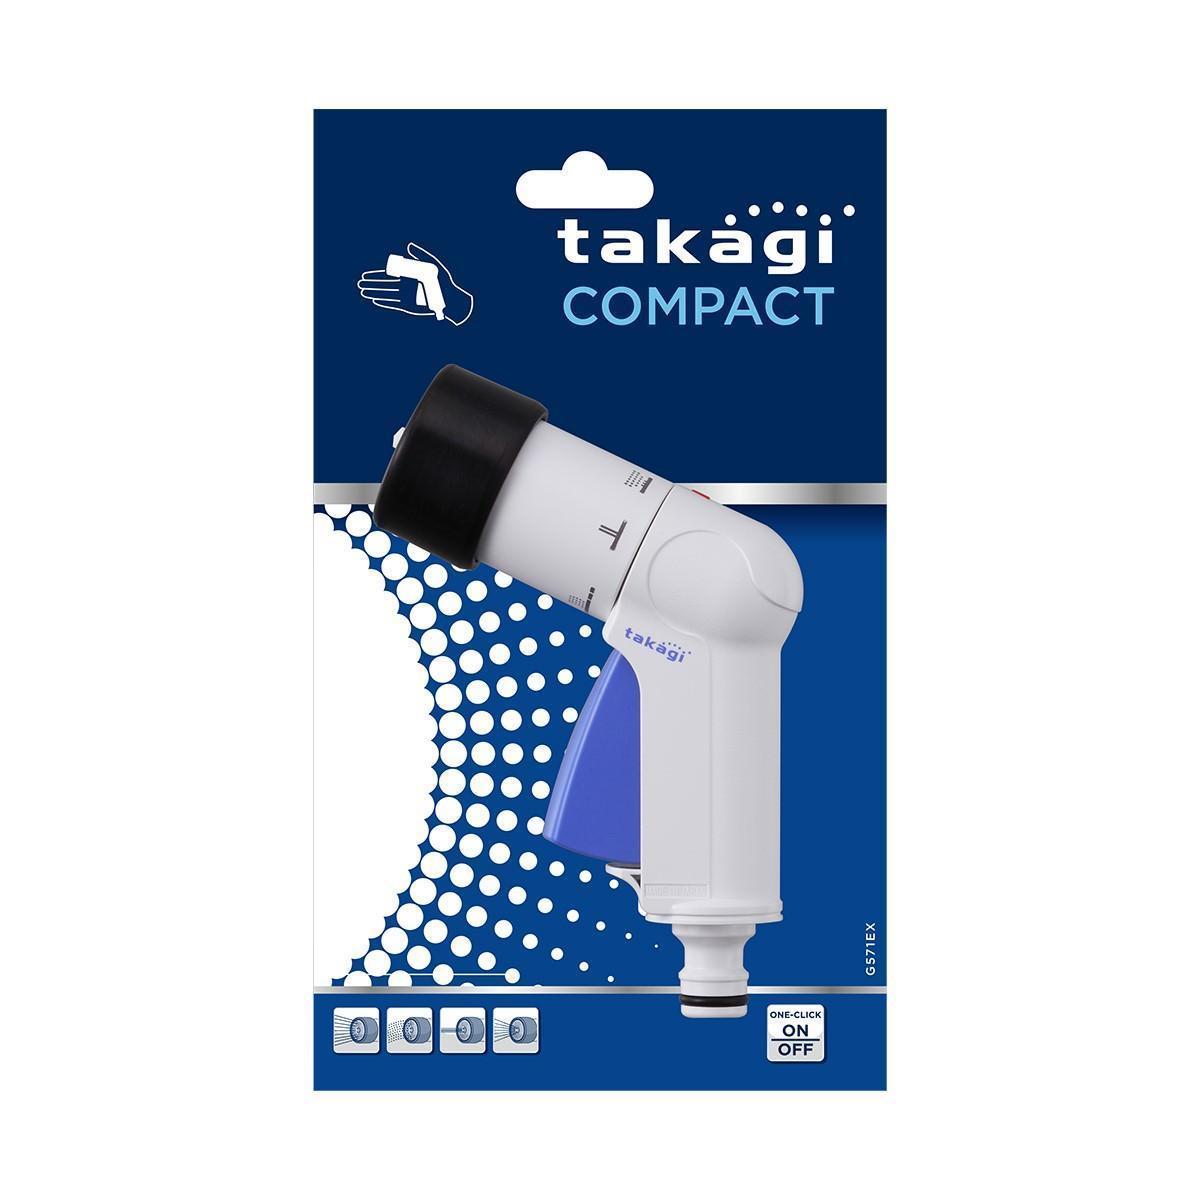 Compact Nozzle by Takagi - THE PLANT SOCIETY